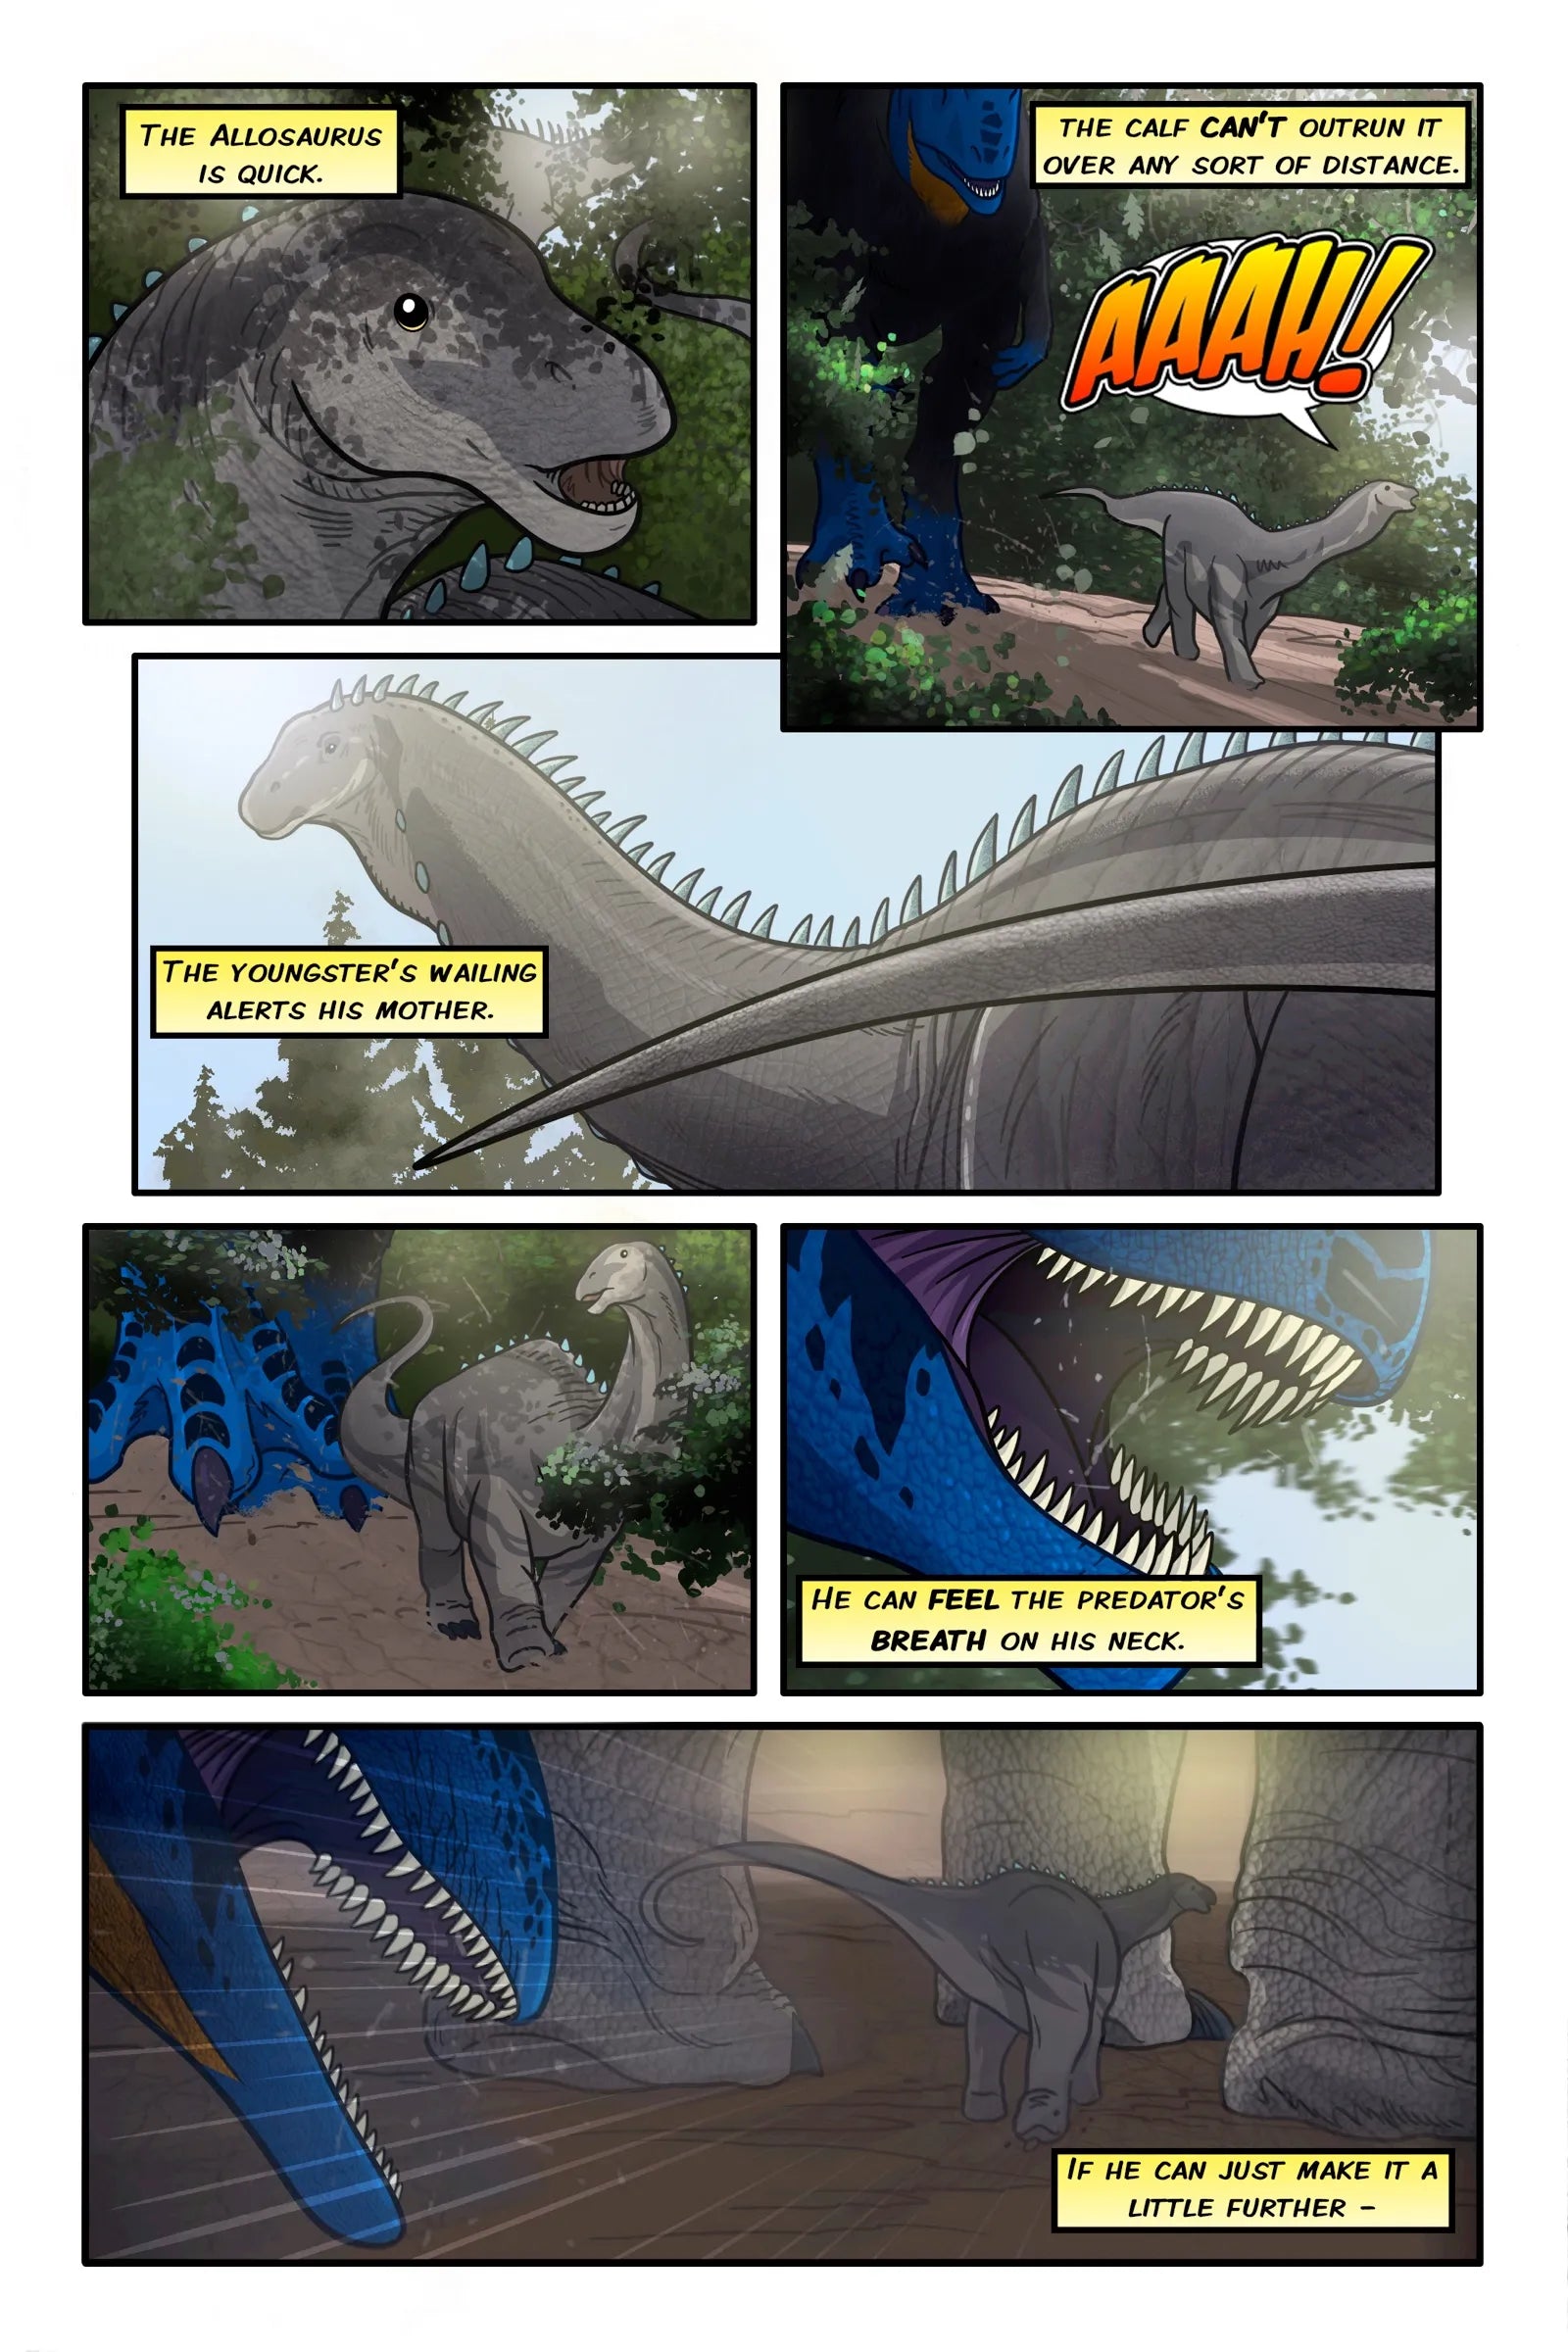 Jurassic, a Graphic Novel